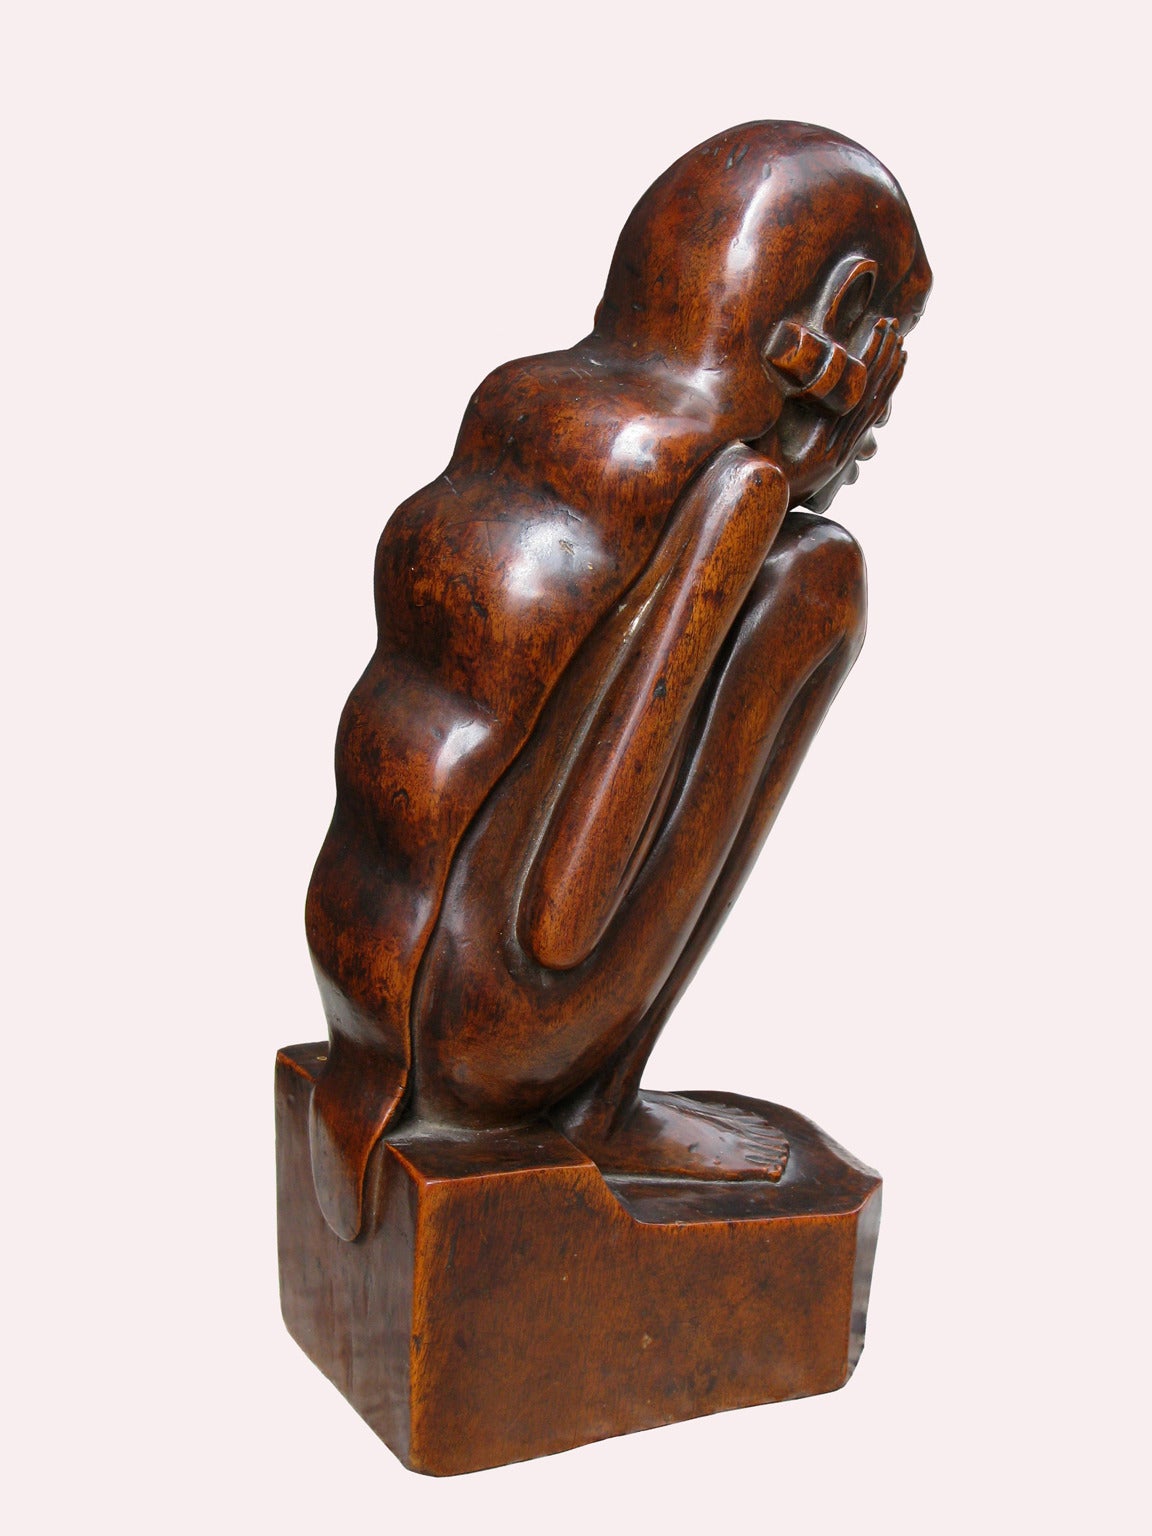 Balinese Wooden Art Deco Sculpture, circa 1935 For Sale 1